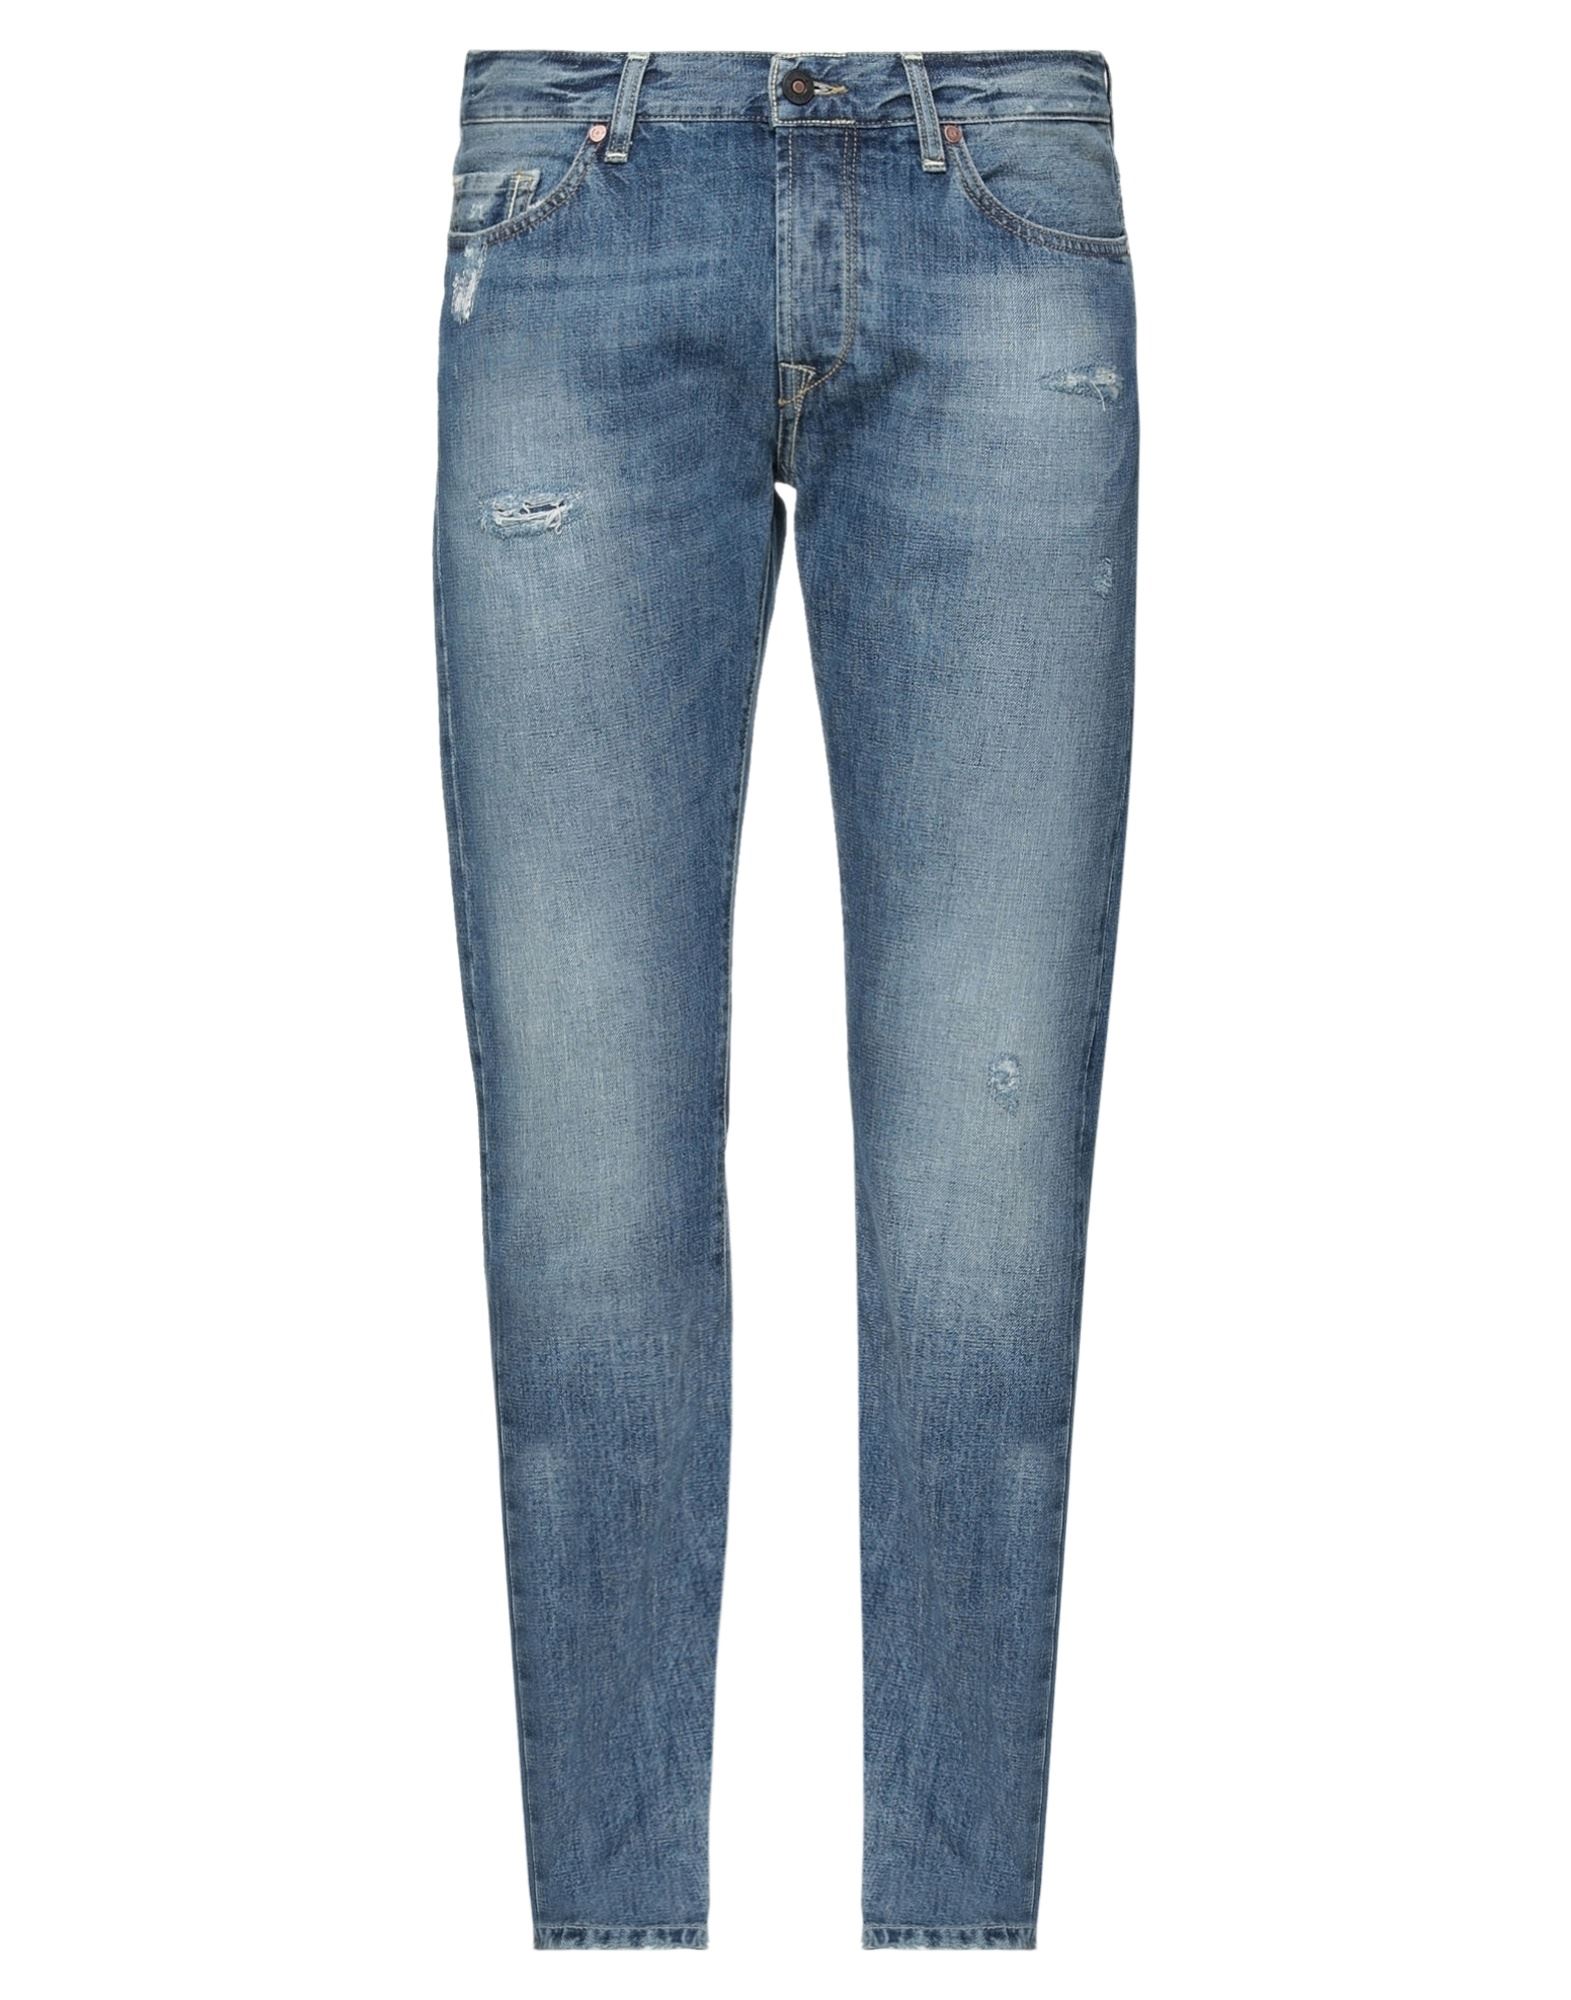 TELA GENOVA Jeans | Smart Closet